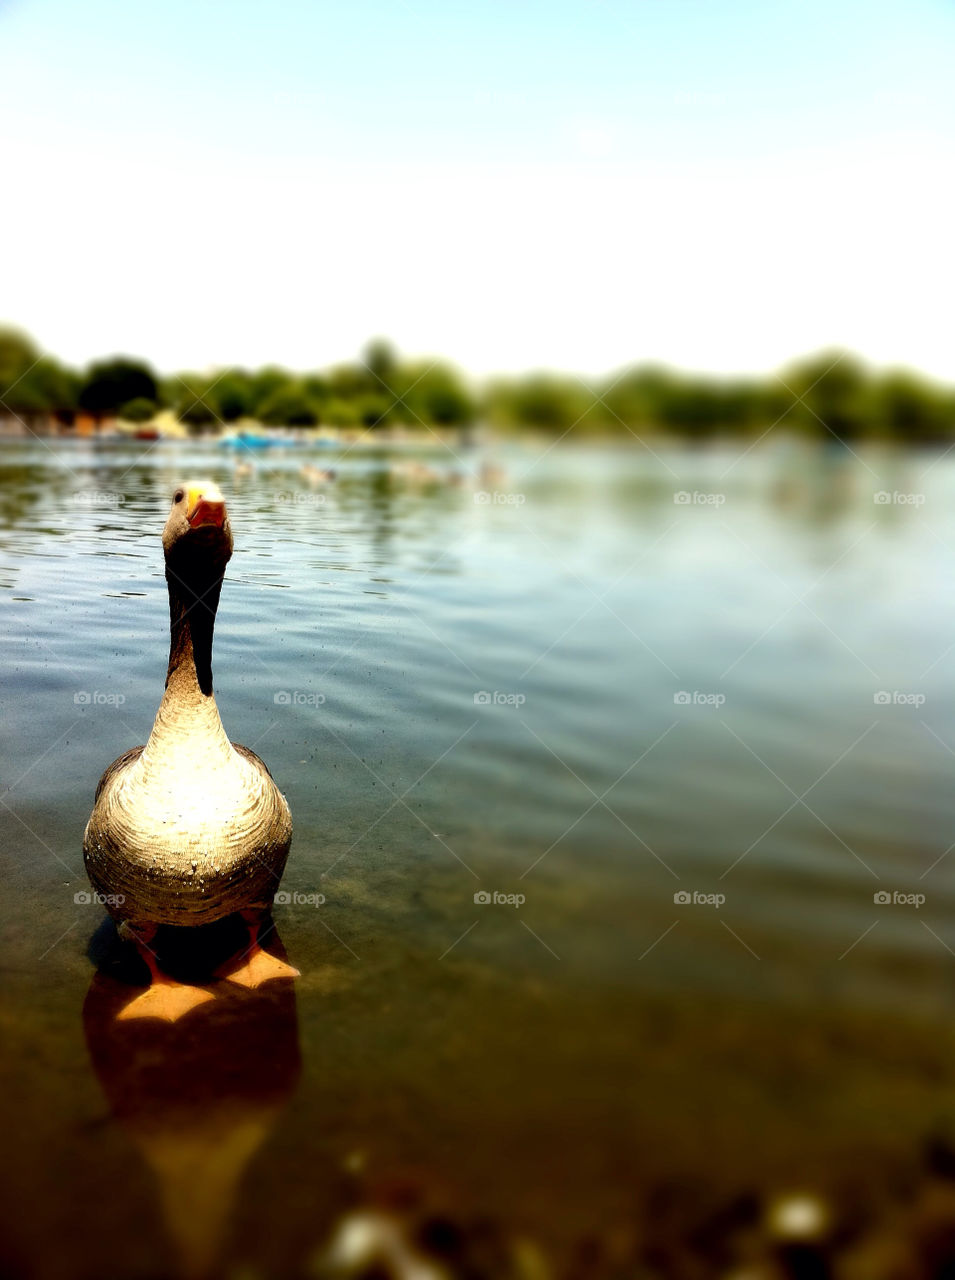 london park river duck by kikicheeky